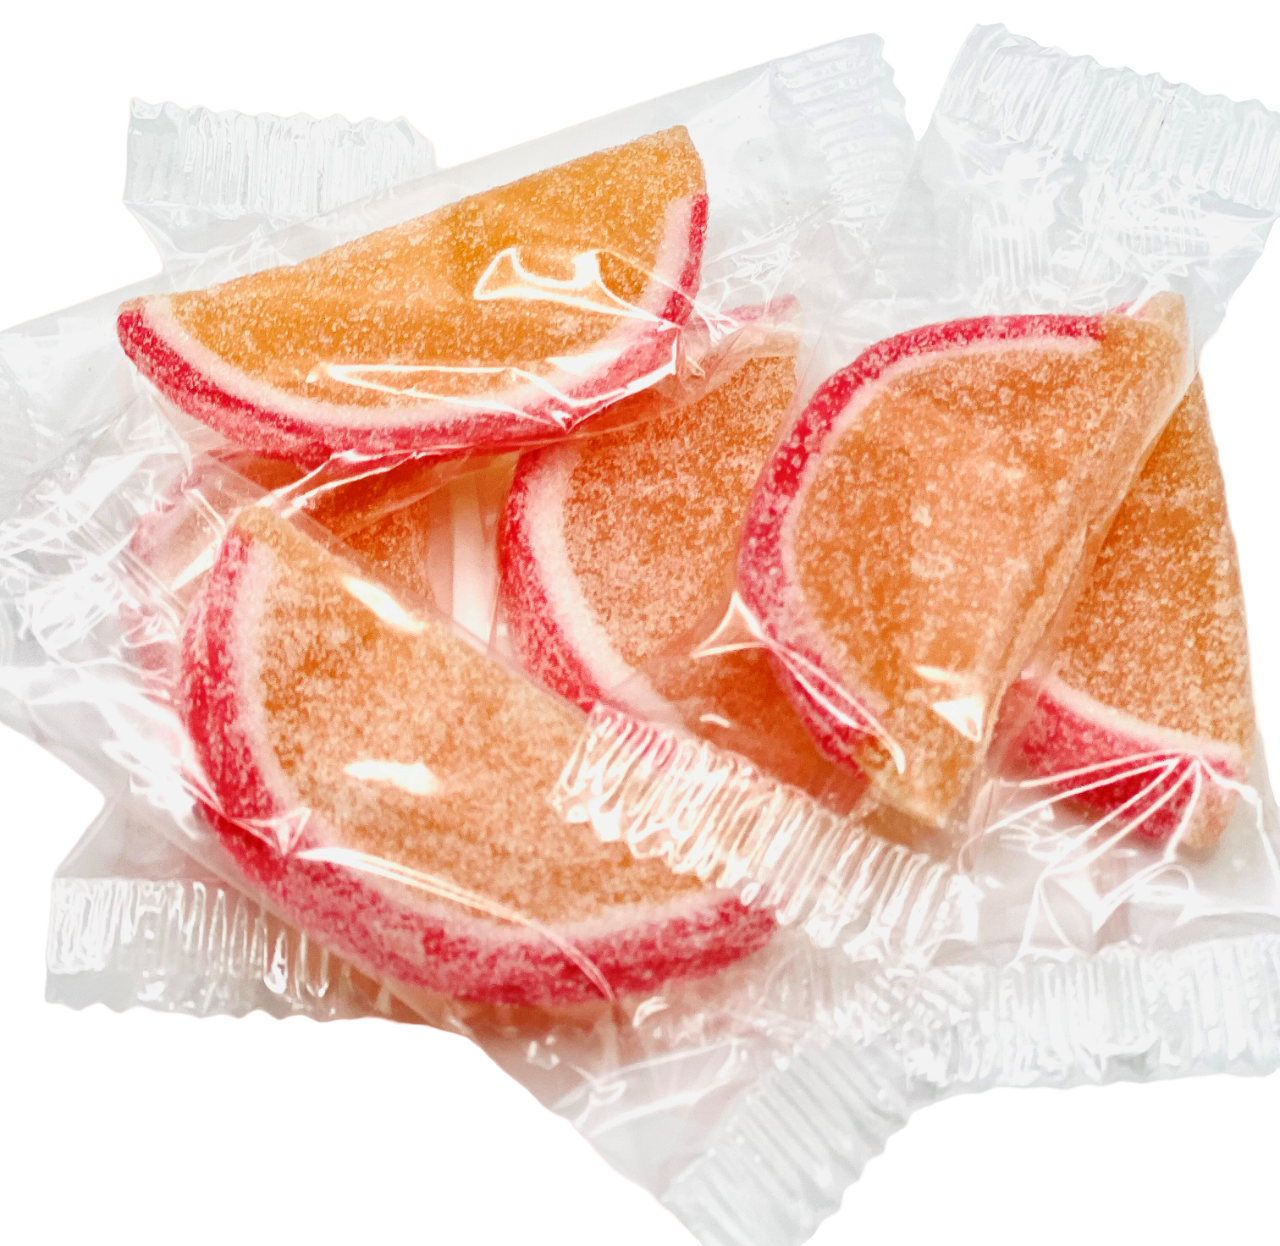 Individually Wrapped Fruit Slices - BULK – Boston Fruit Slices